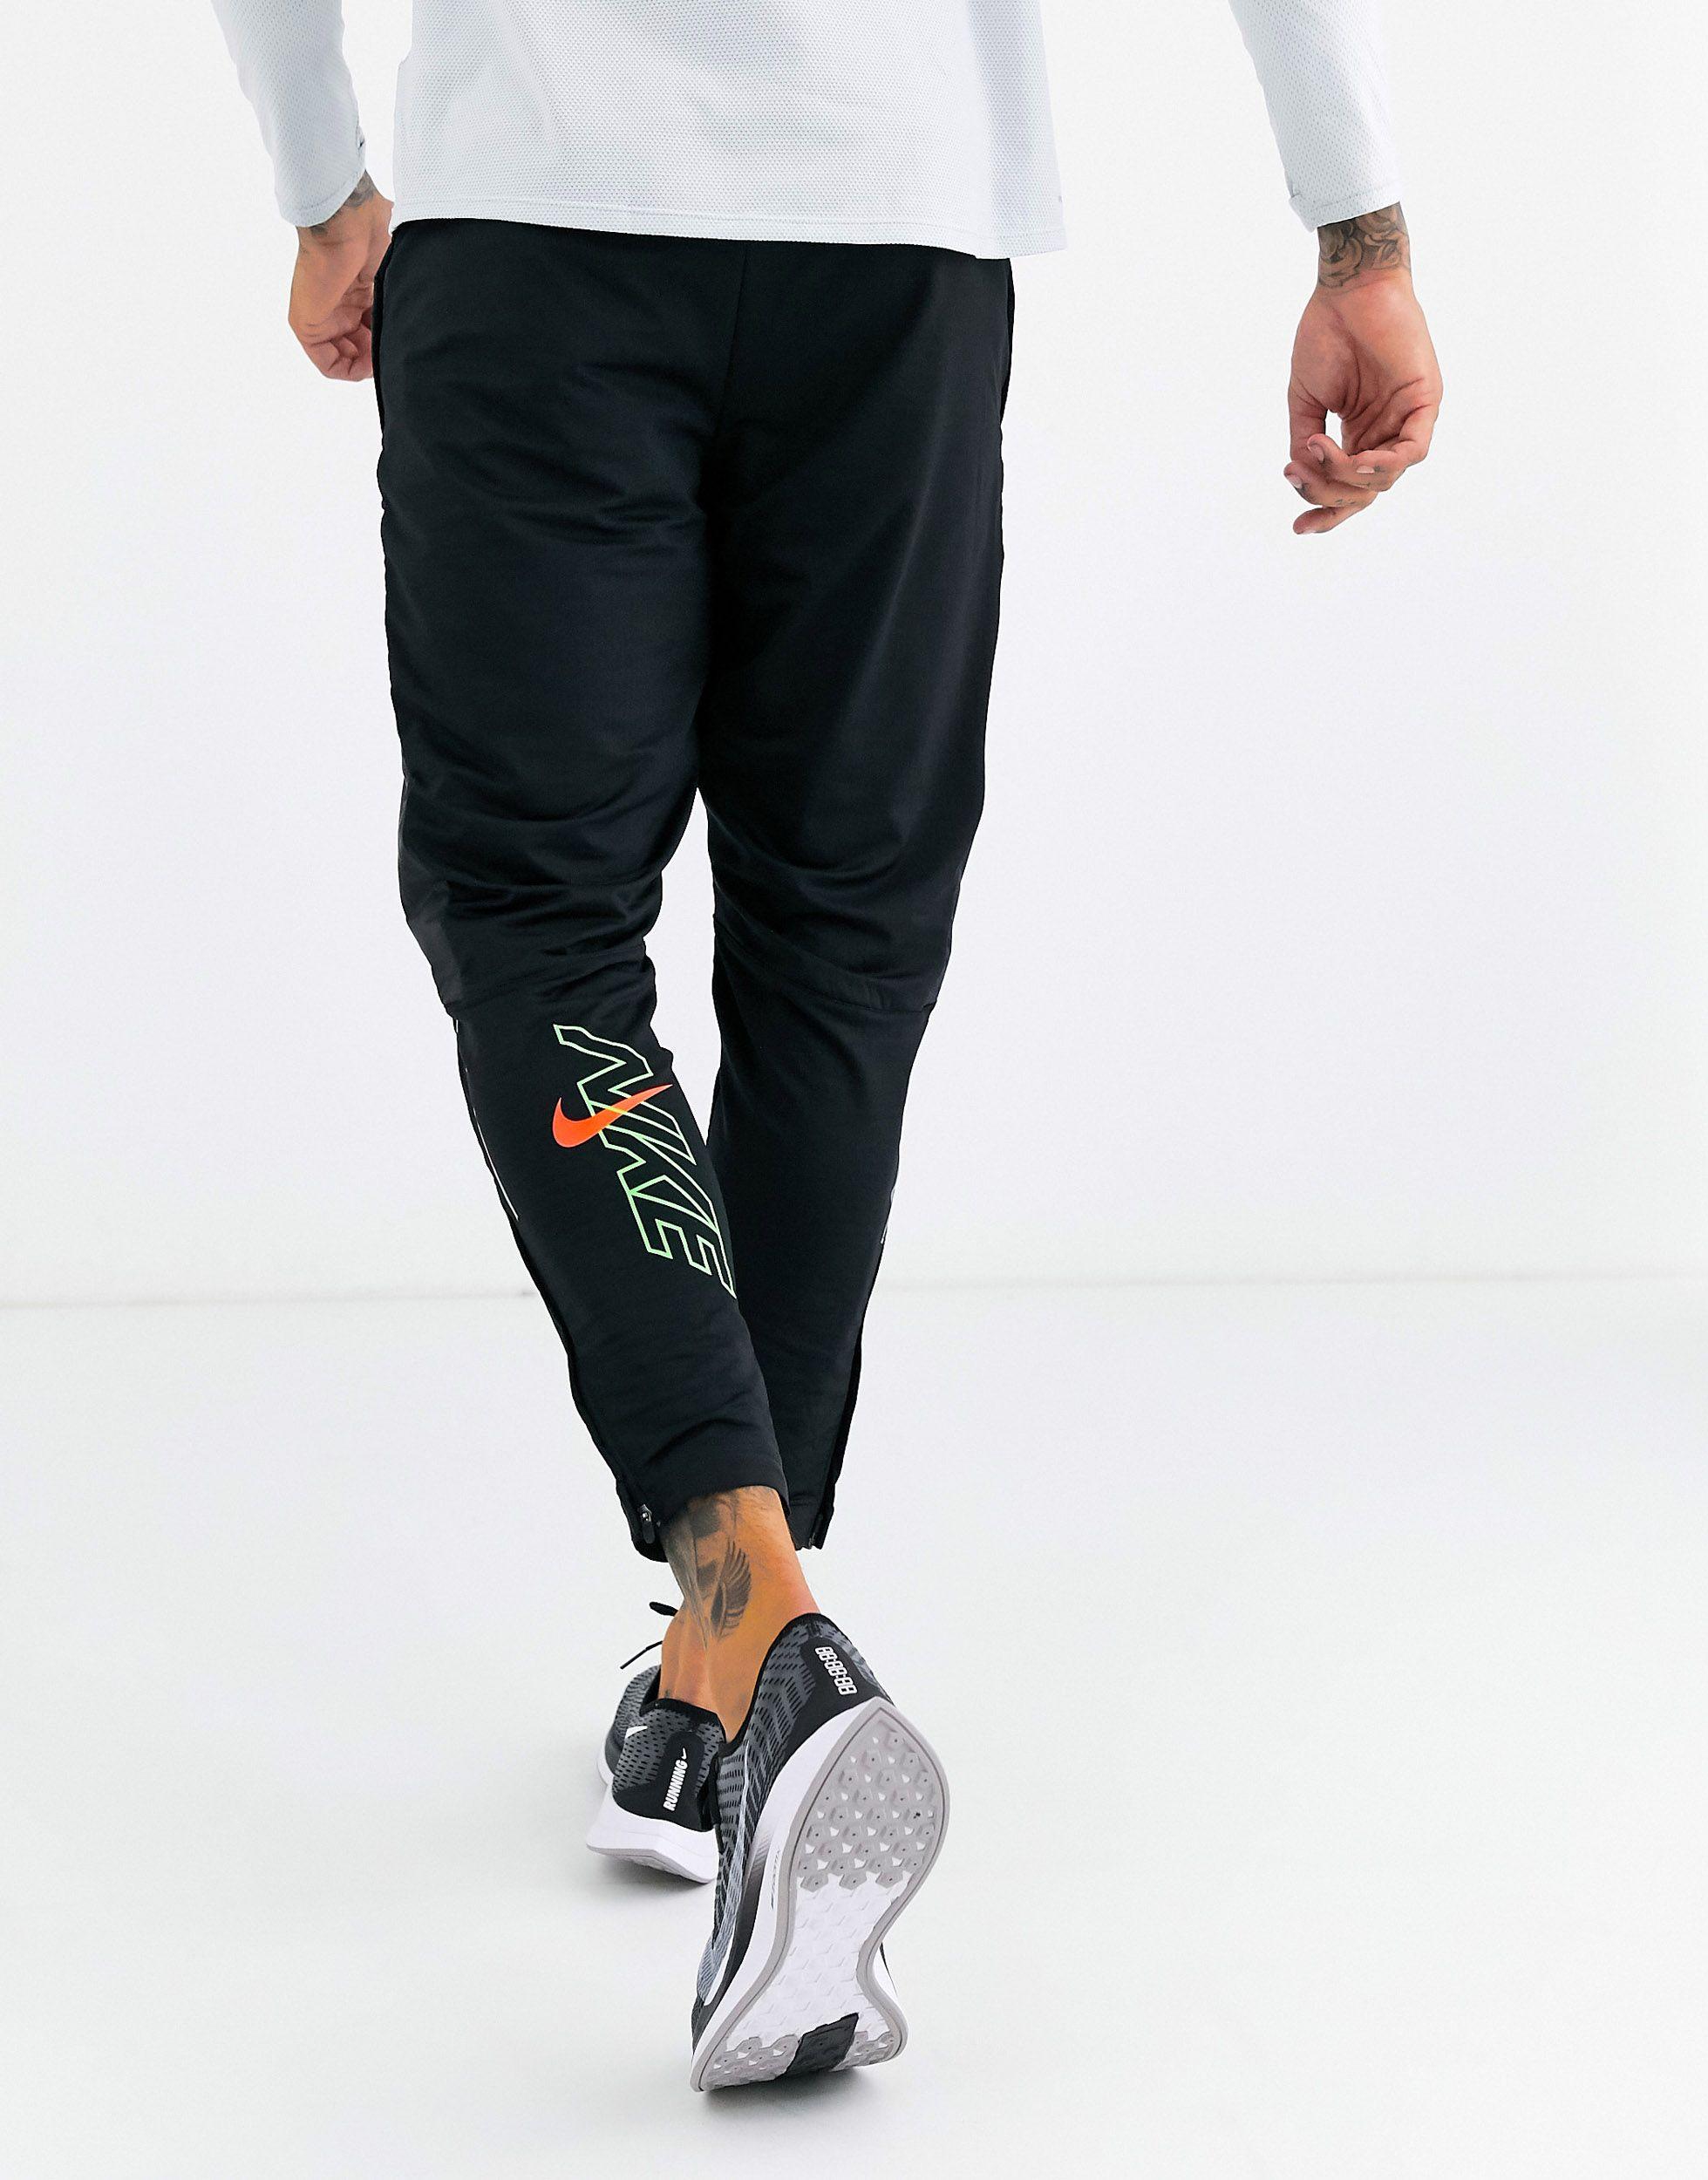 Nike Synthetic Air Pack Phantom joggers in Black for Men - Lyst